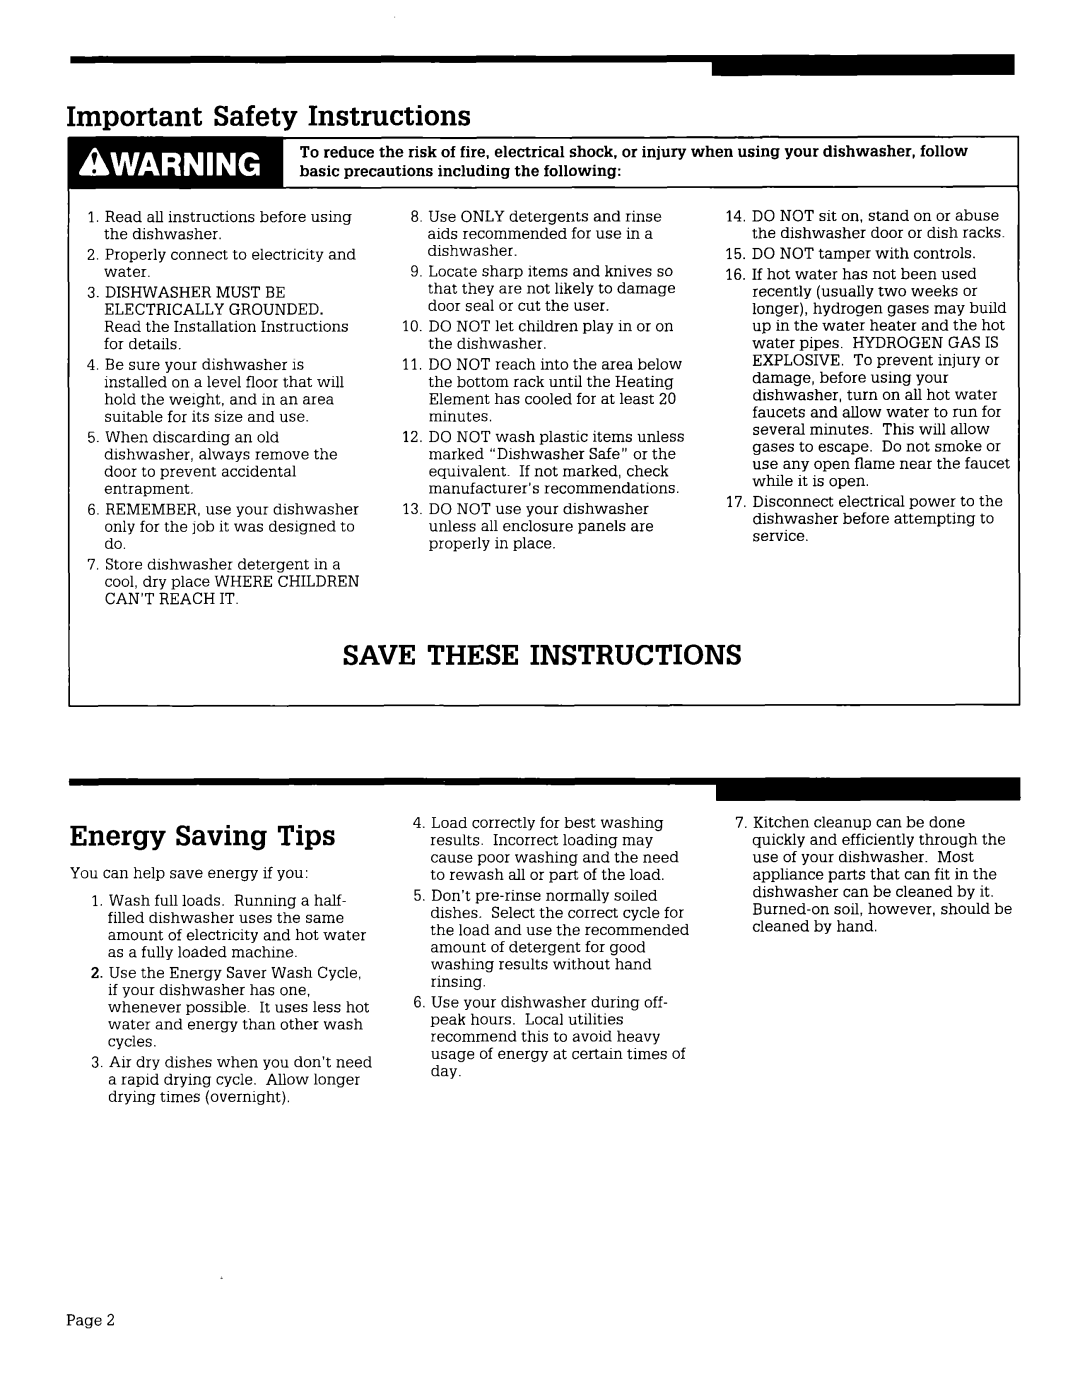 Whirlpool WU4406V, WU565OV, WU3000V, WU3006V Important Safety Instructions, Save These Instructions, Energy Saving Tips 